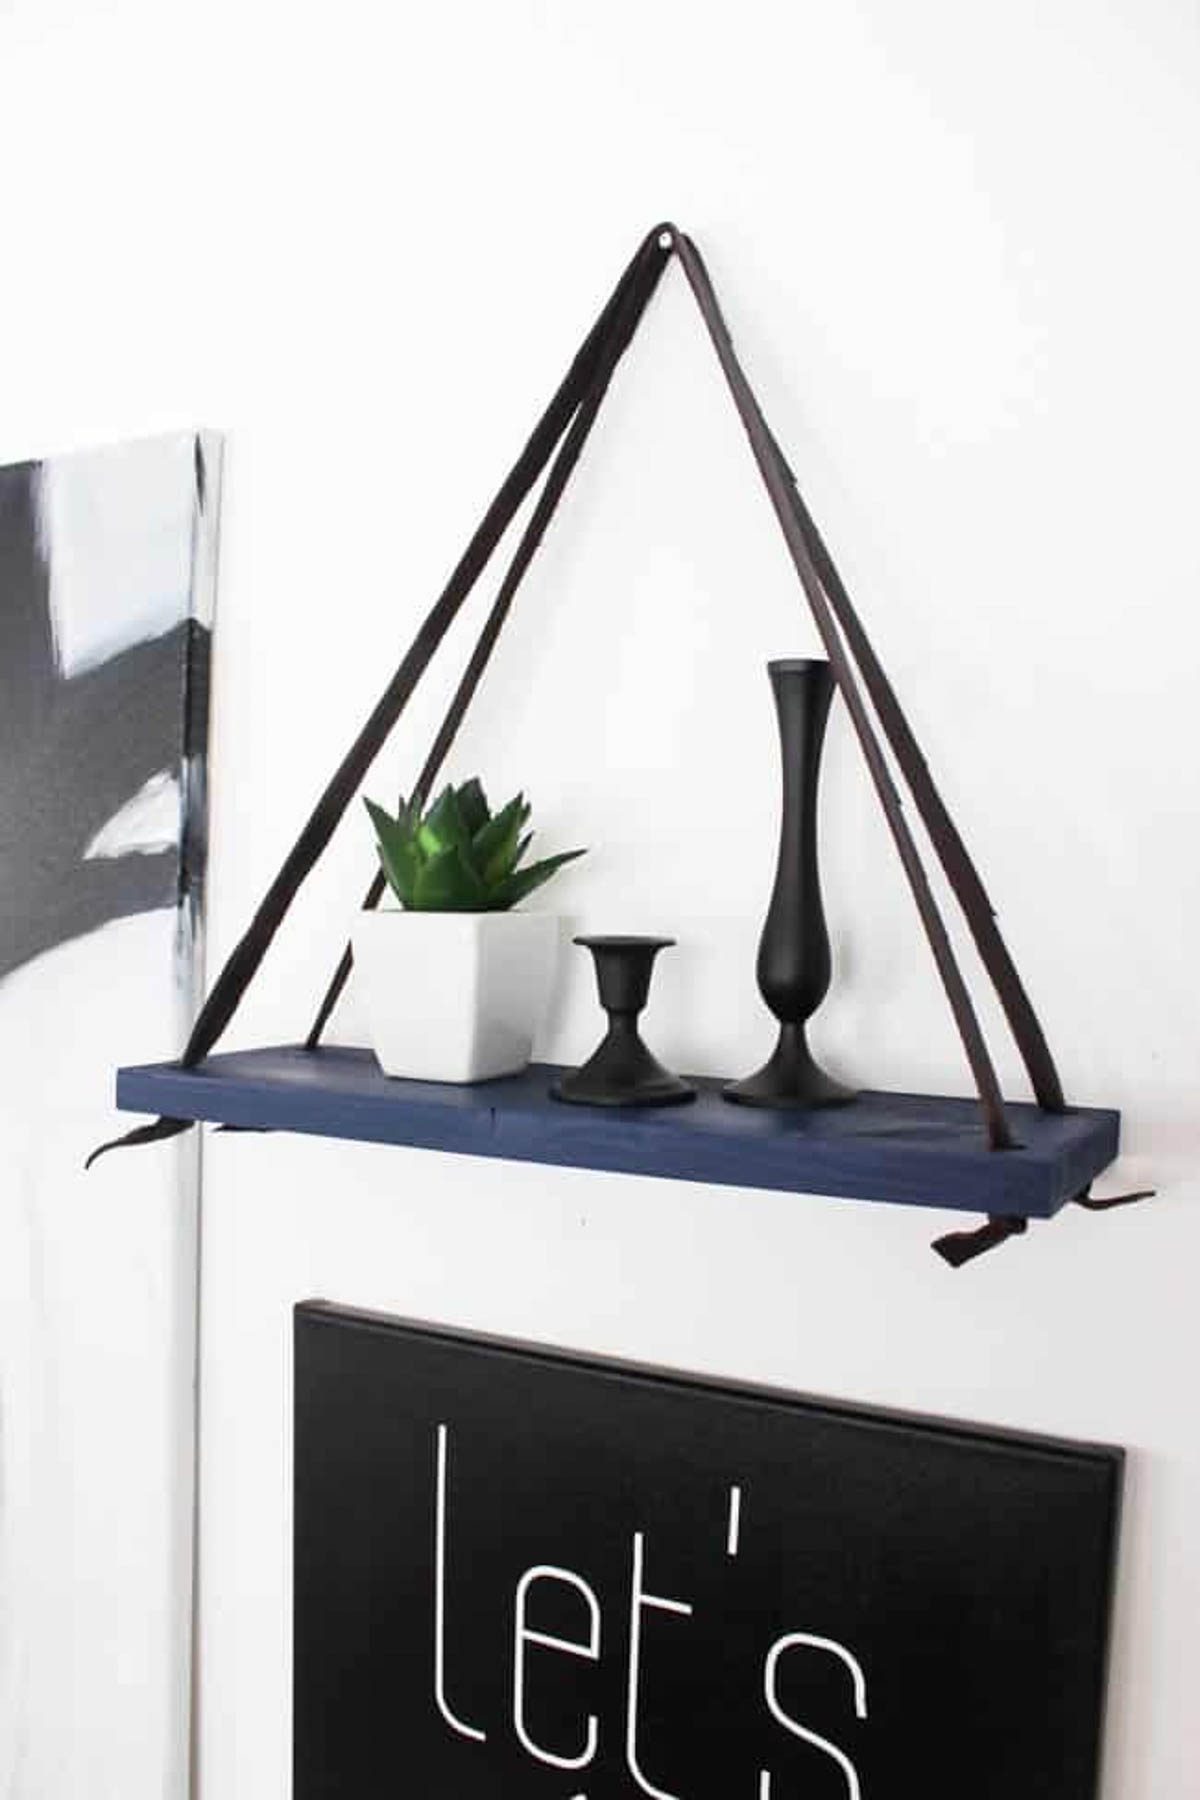 Image of a DIY hanging shelf